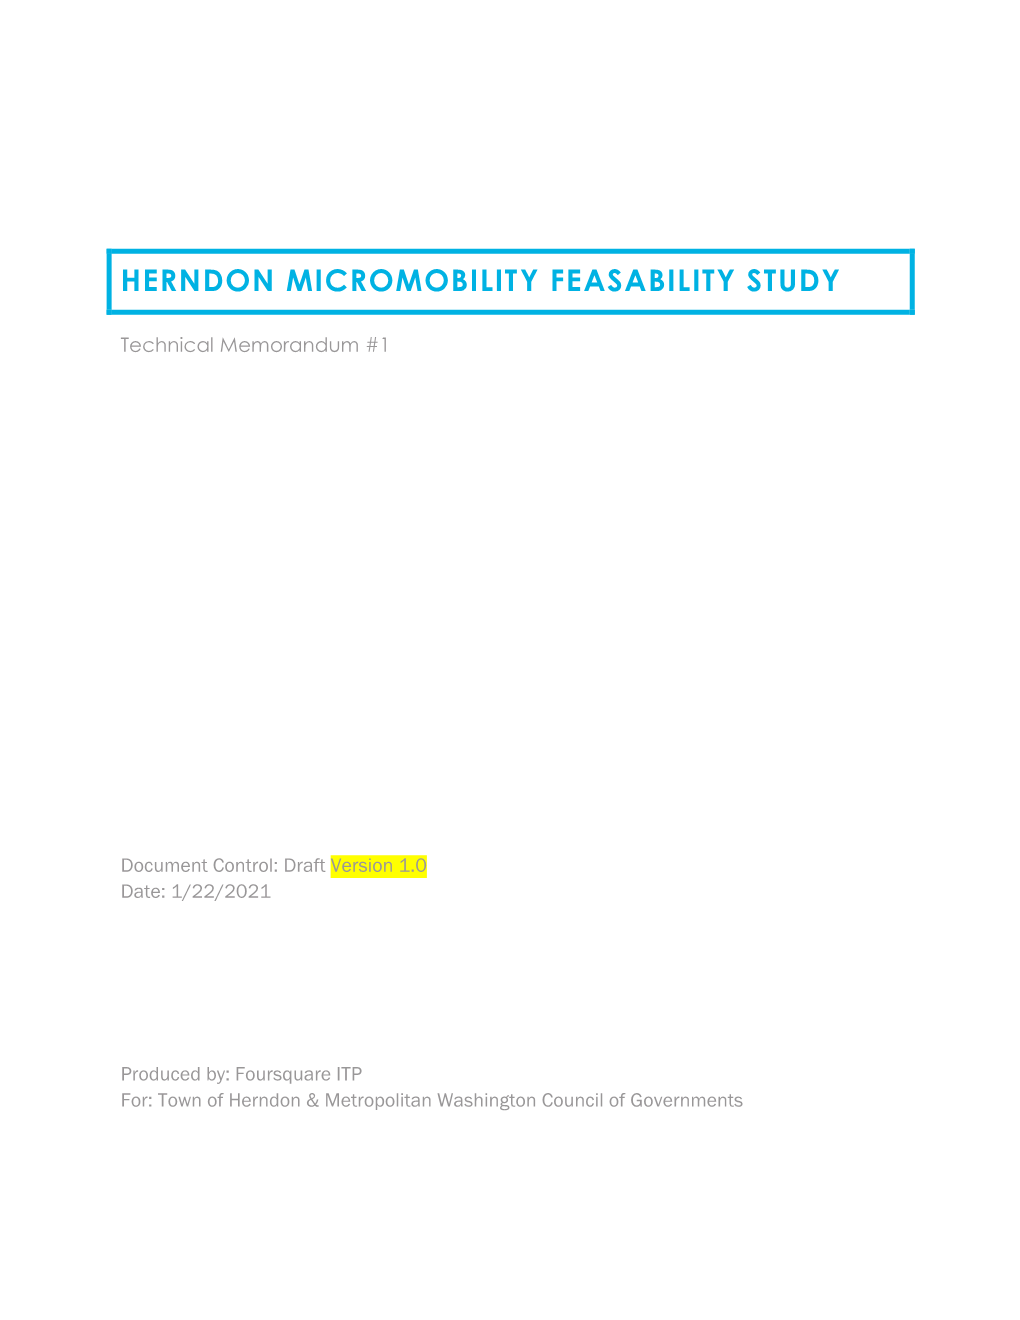 Herndon Micromobility Feasibility Study | Technical Memorandum #1